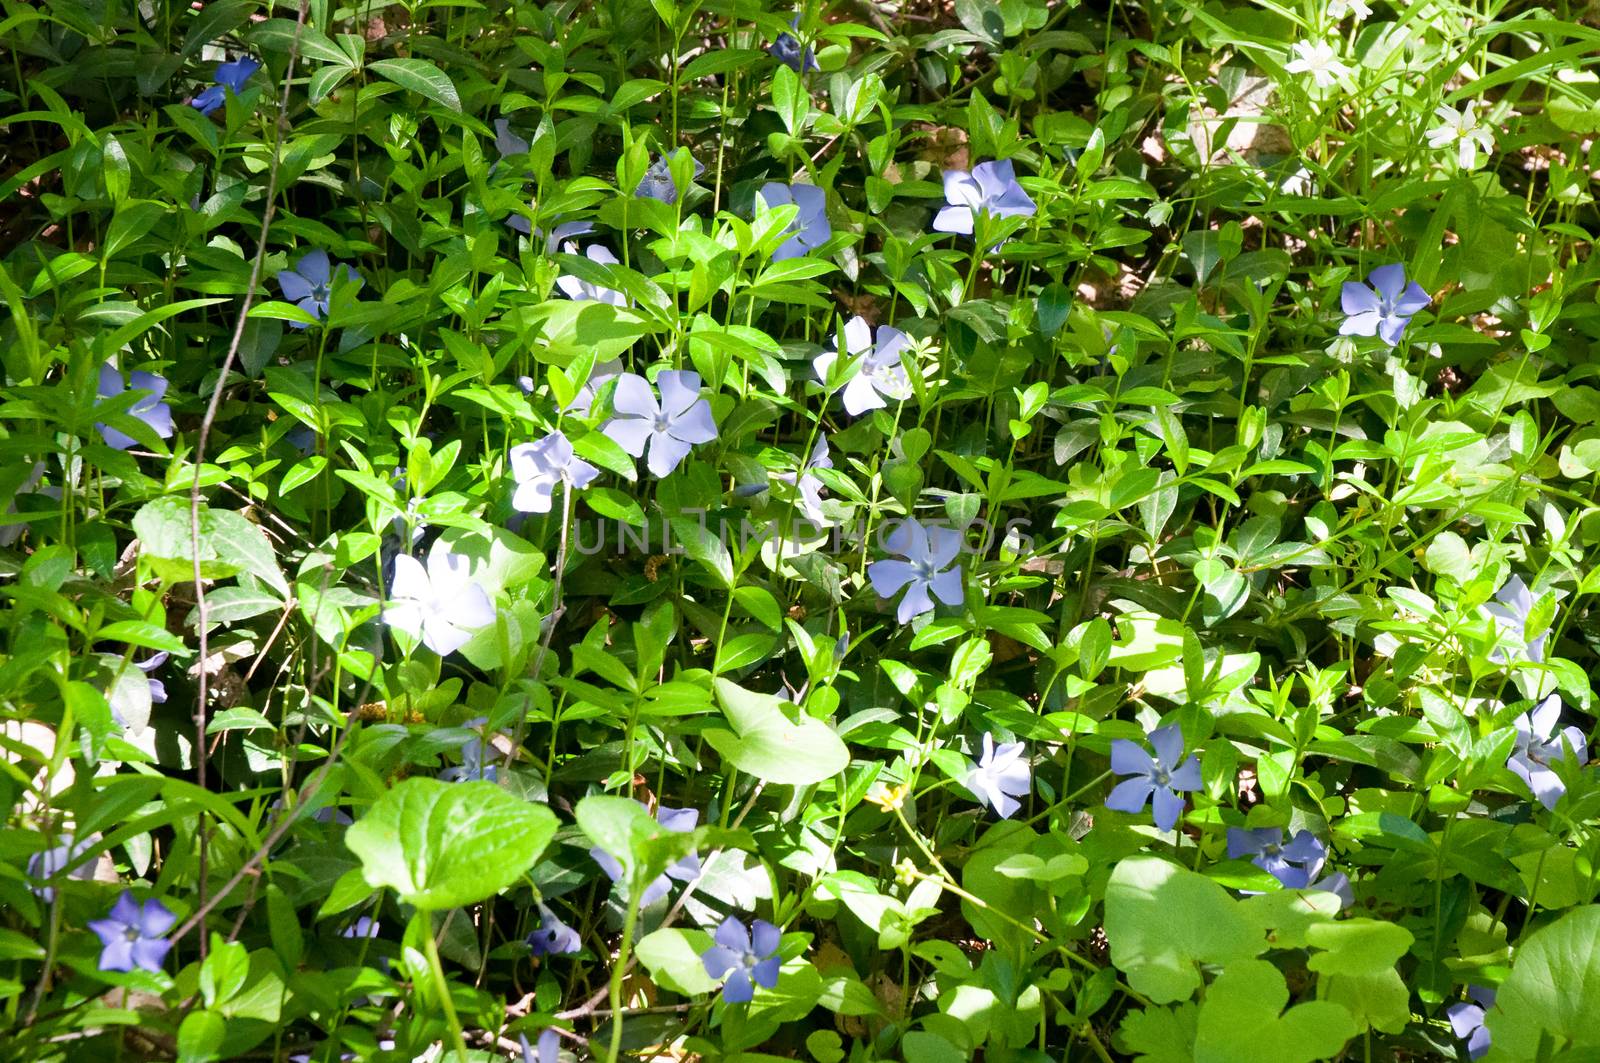 Wild Vinca (Periwinkle) flower head and forest vegetation.